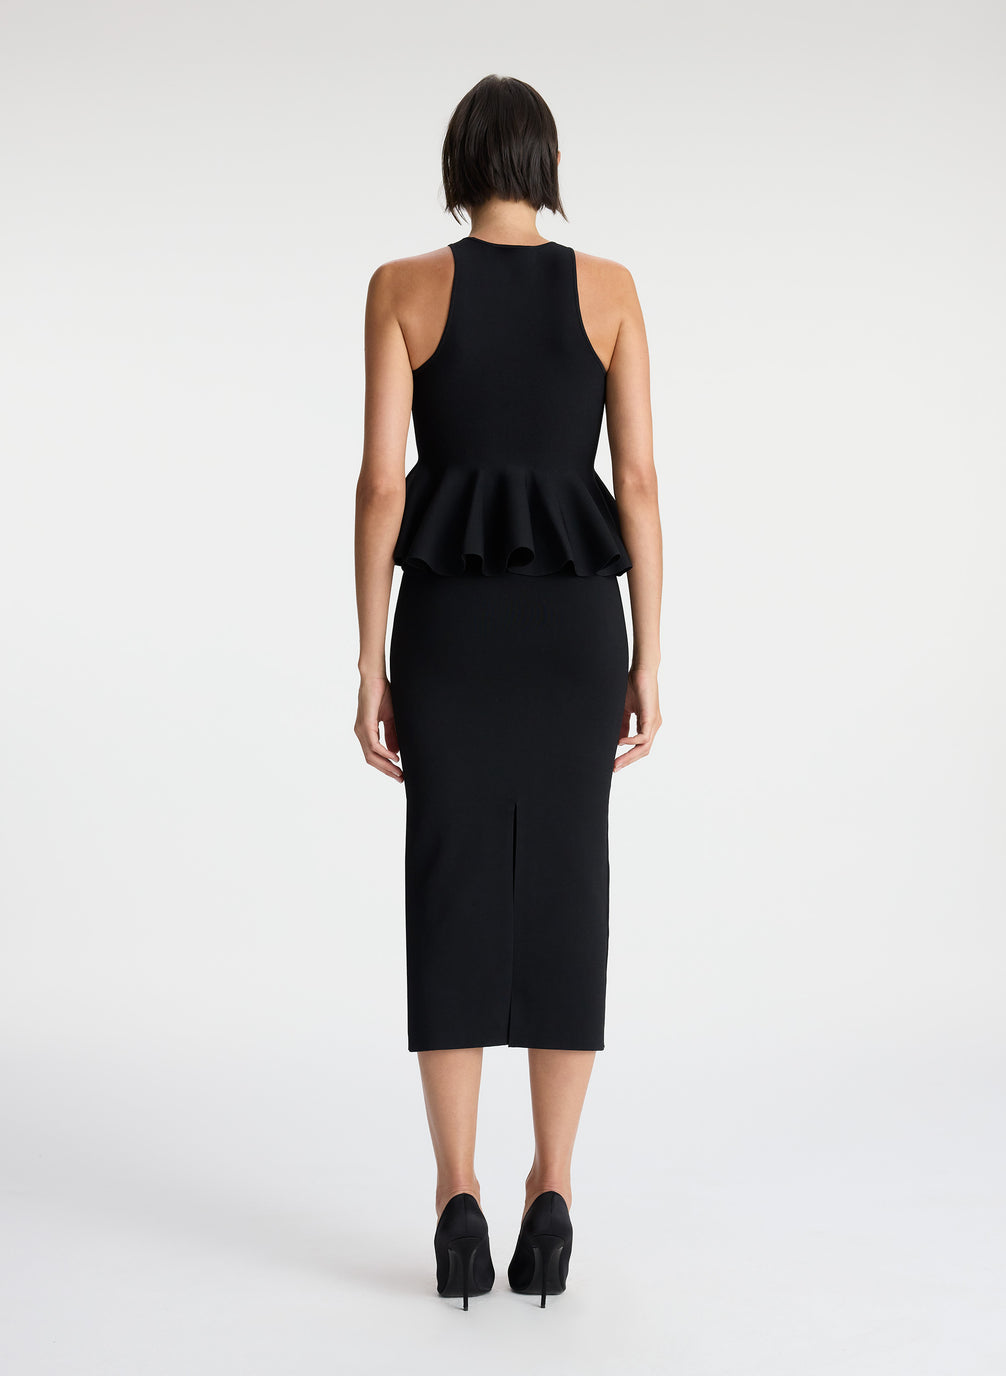 back  view of woman wearing black sleeveless peplum top and black midi skirt